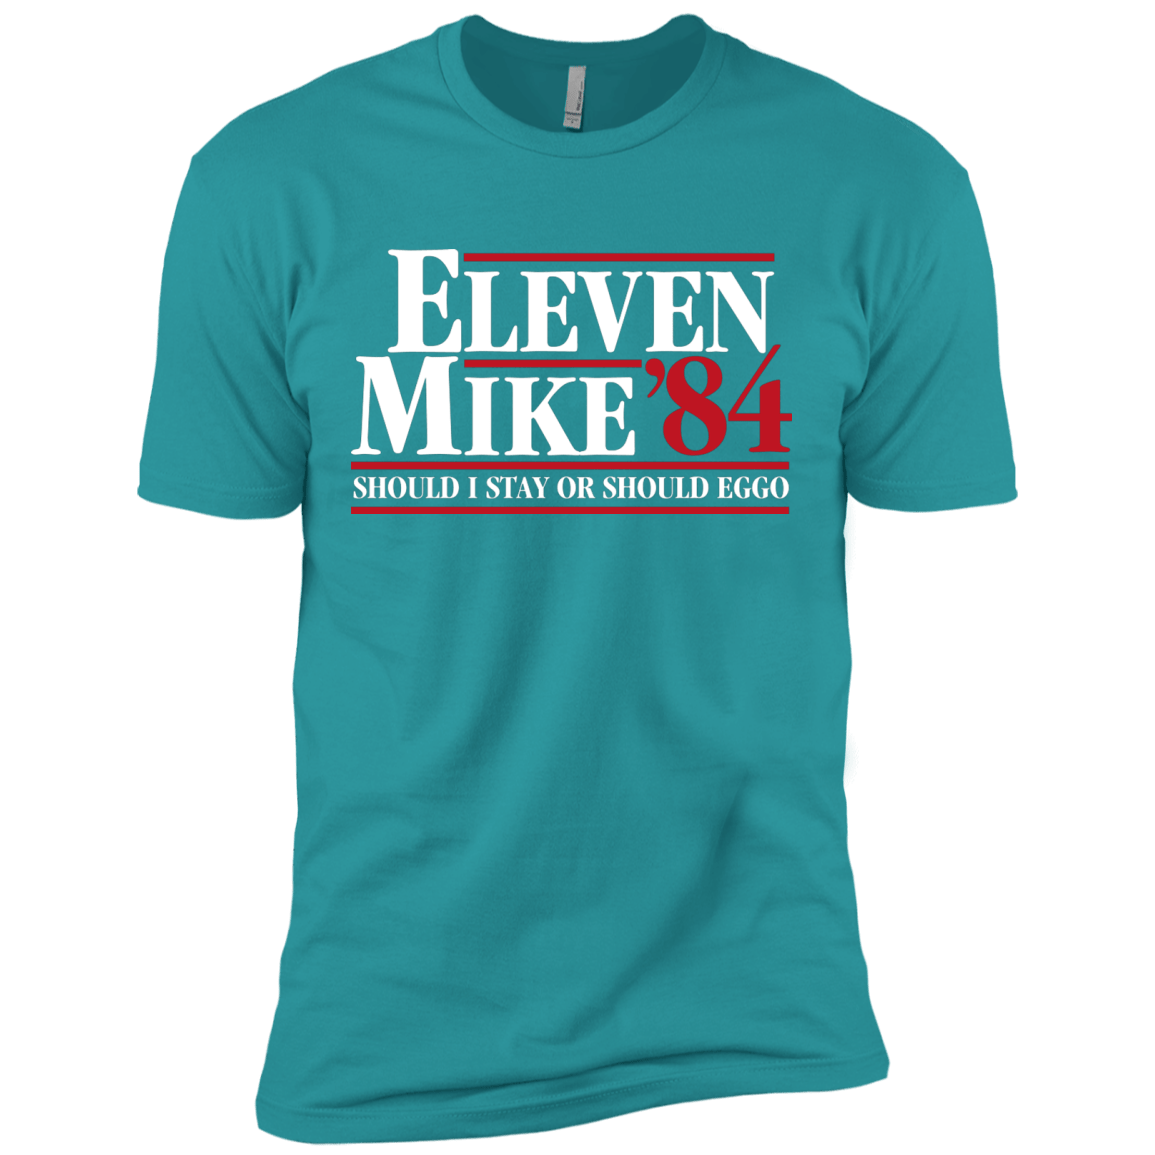 T-Shirts Tahiti Blue / X-Small Eleven Mike 84 - Should I Stay or Should Eggo Men's Premium T-Shirt